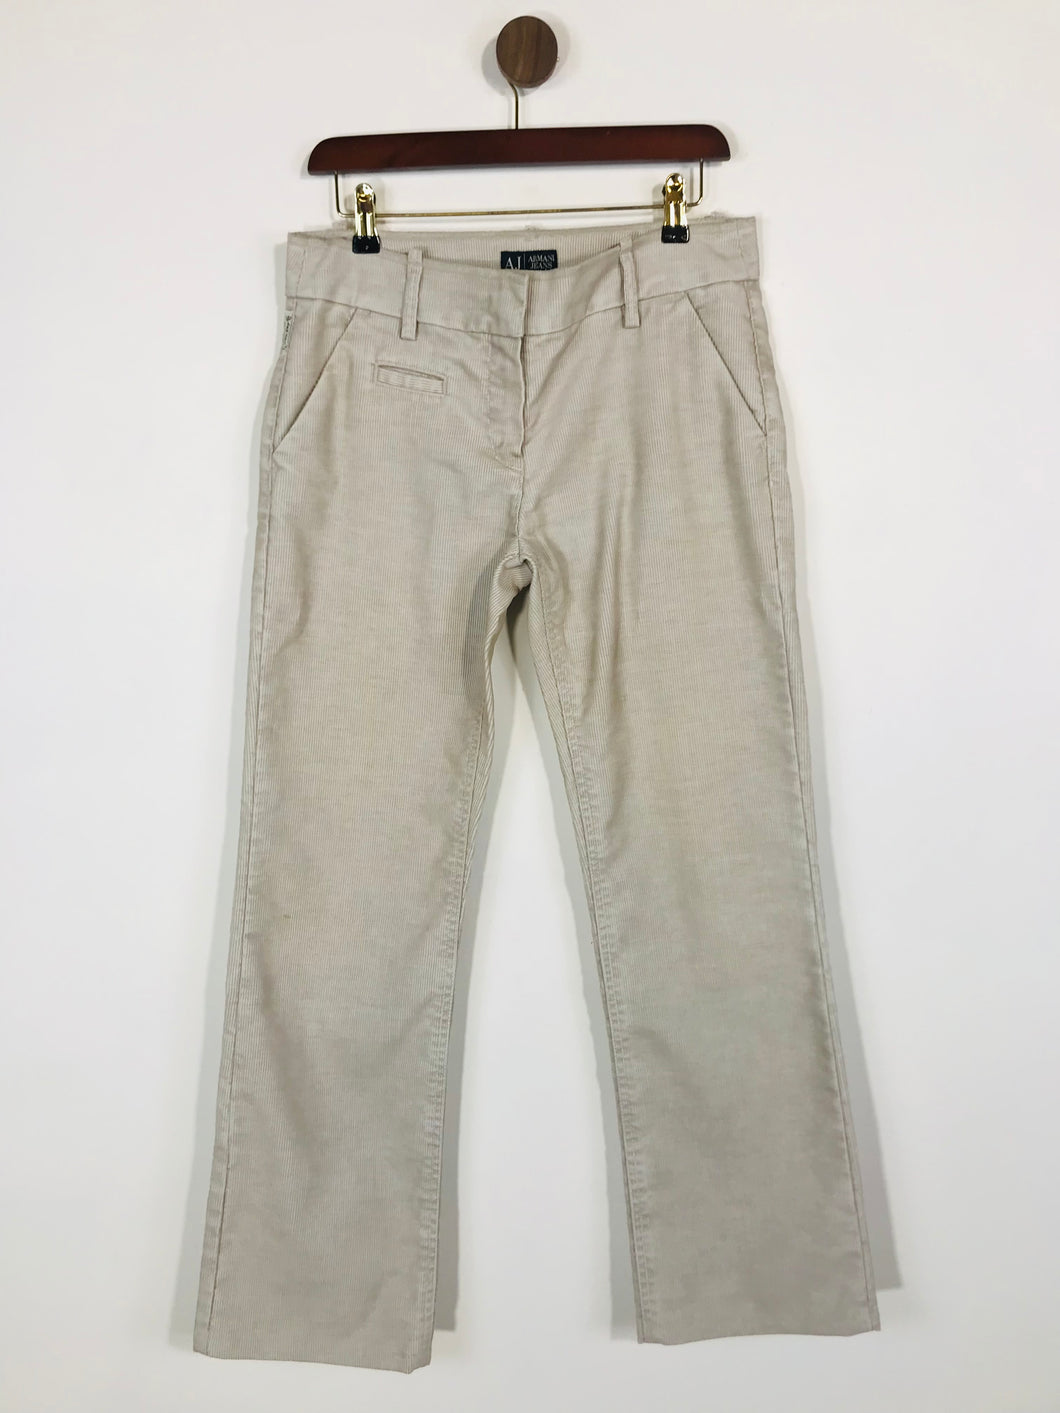 Armani Jeans Women's Cotton Vintage Corduroy Trousers | W28 UK10 | Beige